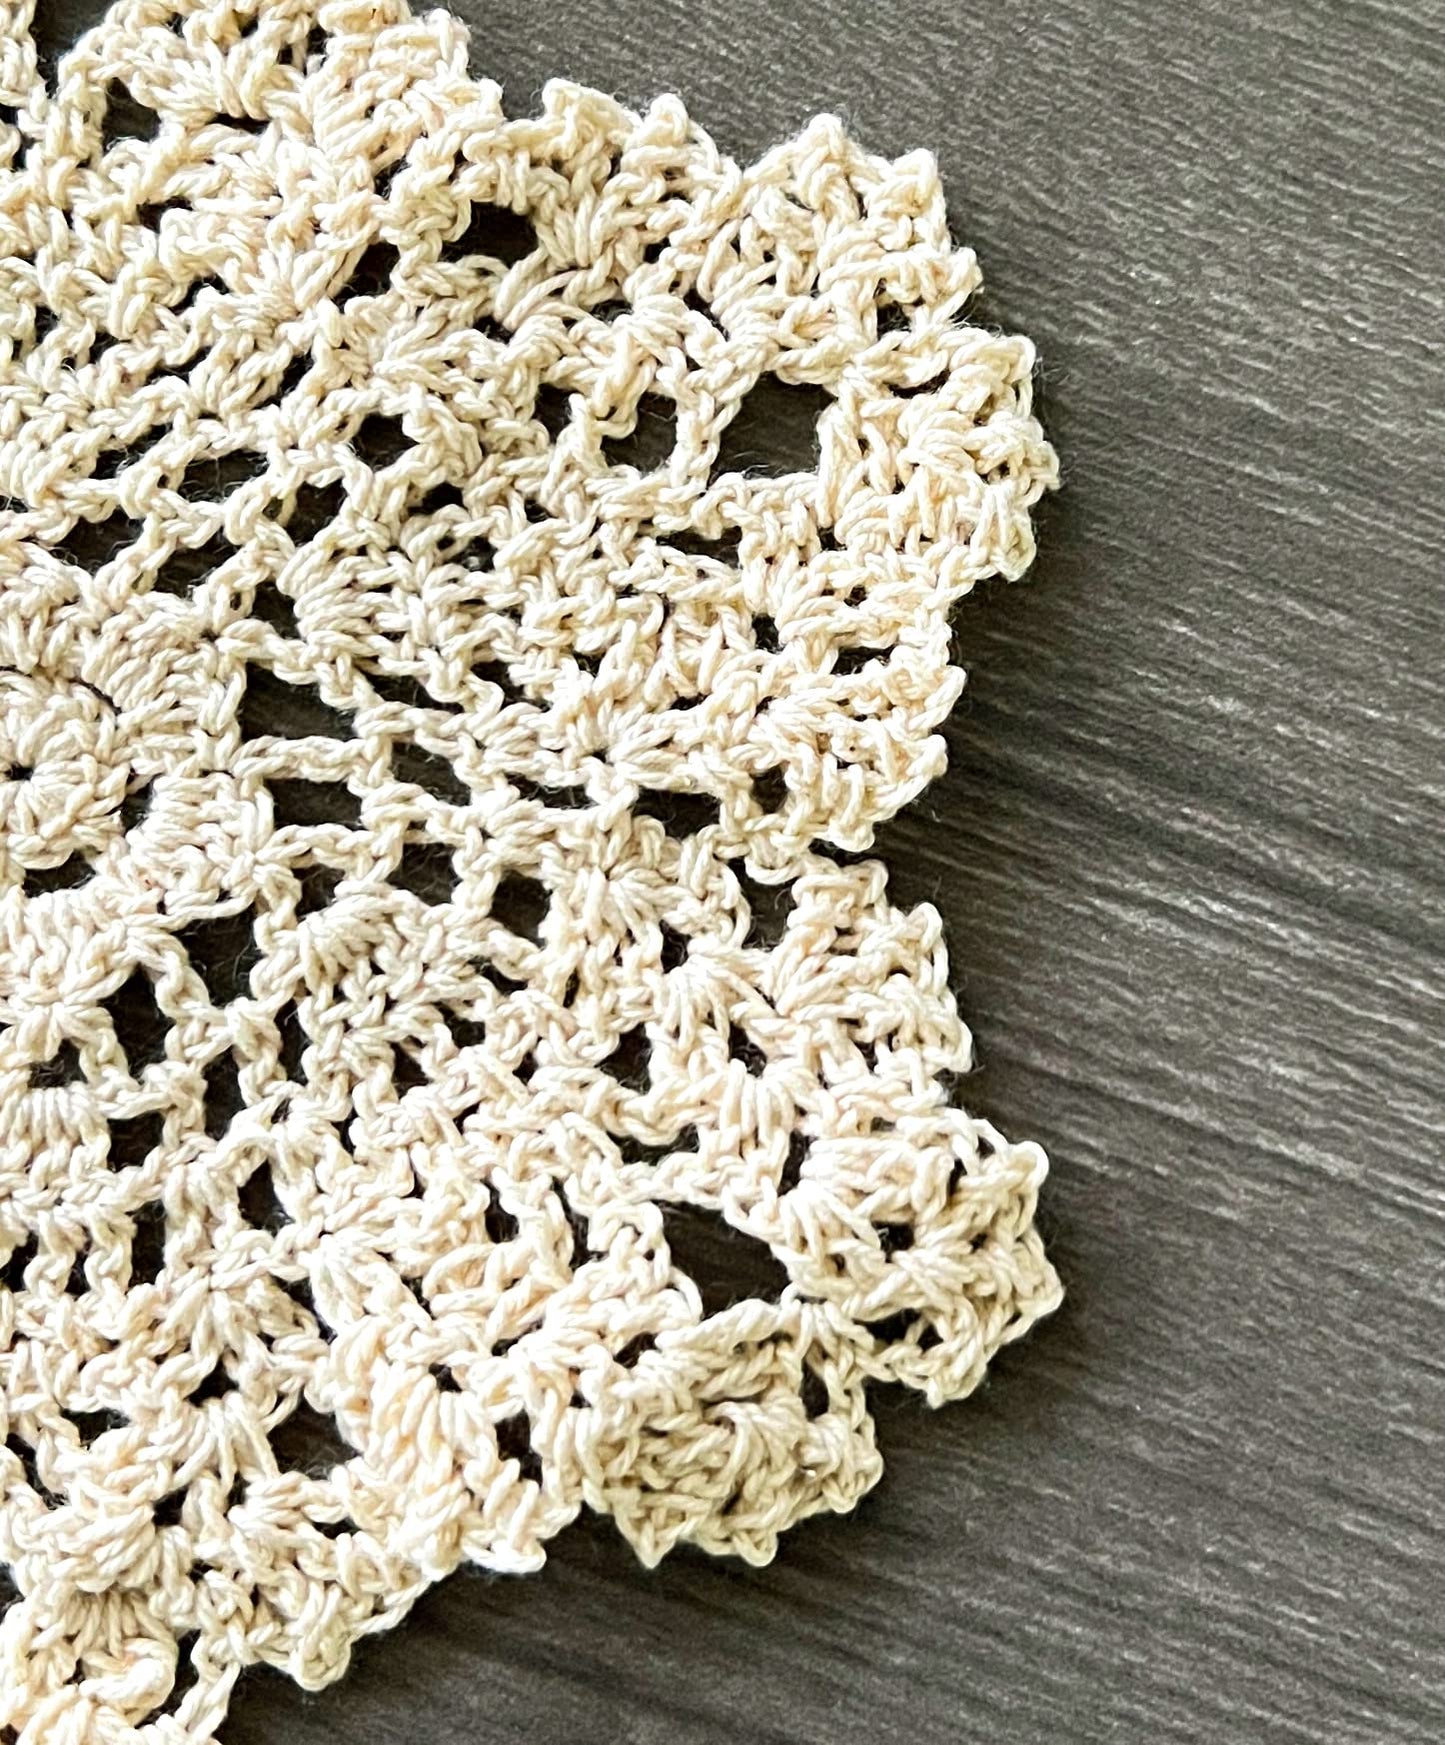 Fennco Styles Handmade Crochet Lace Pineapple Ecru Doily. 4 Inch Round. 100% Cotton. 4 Pieces.